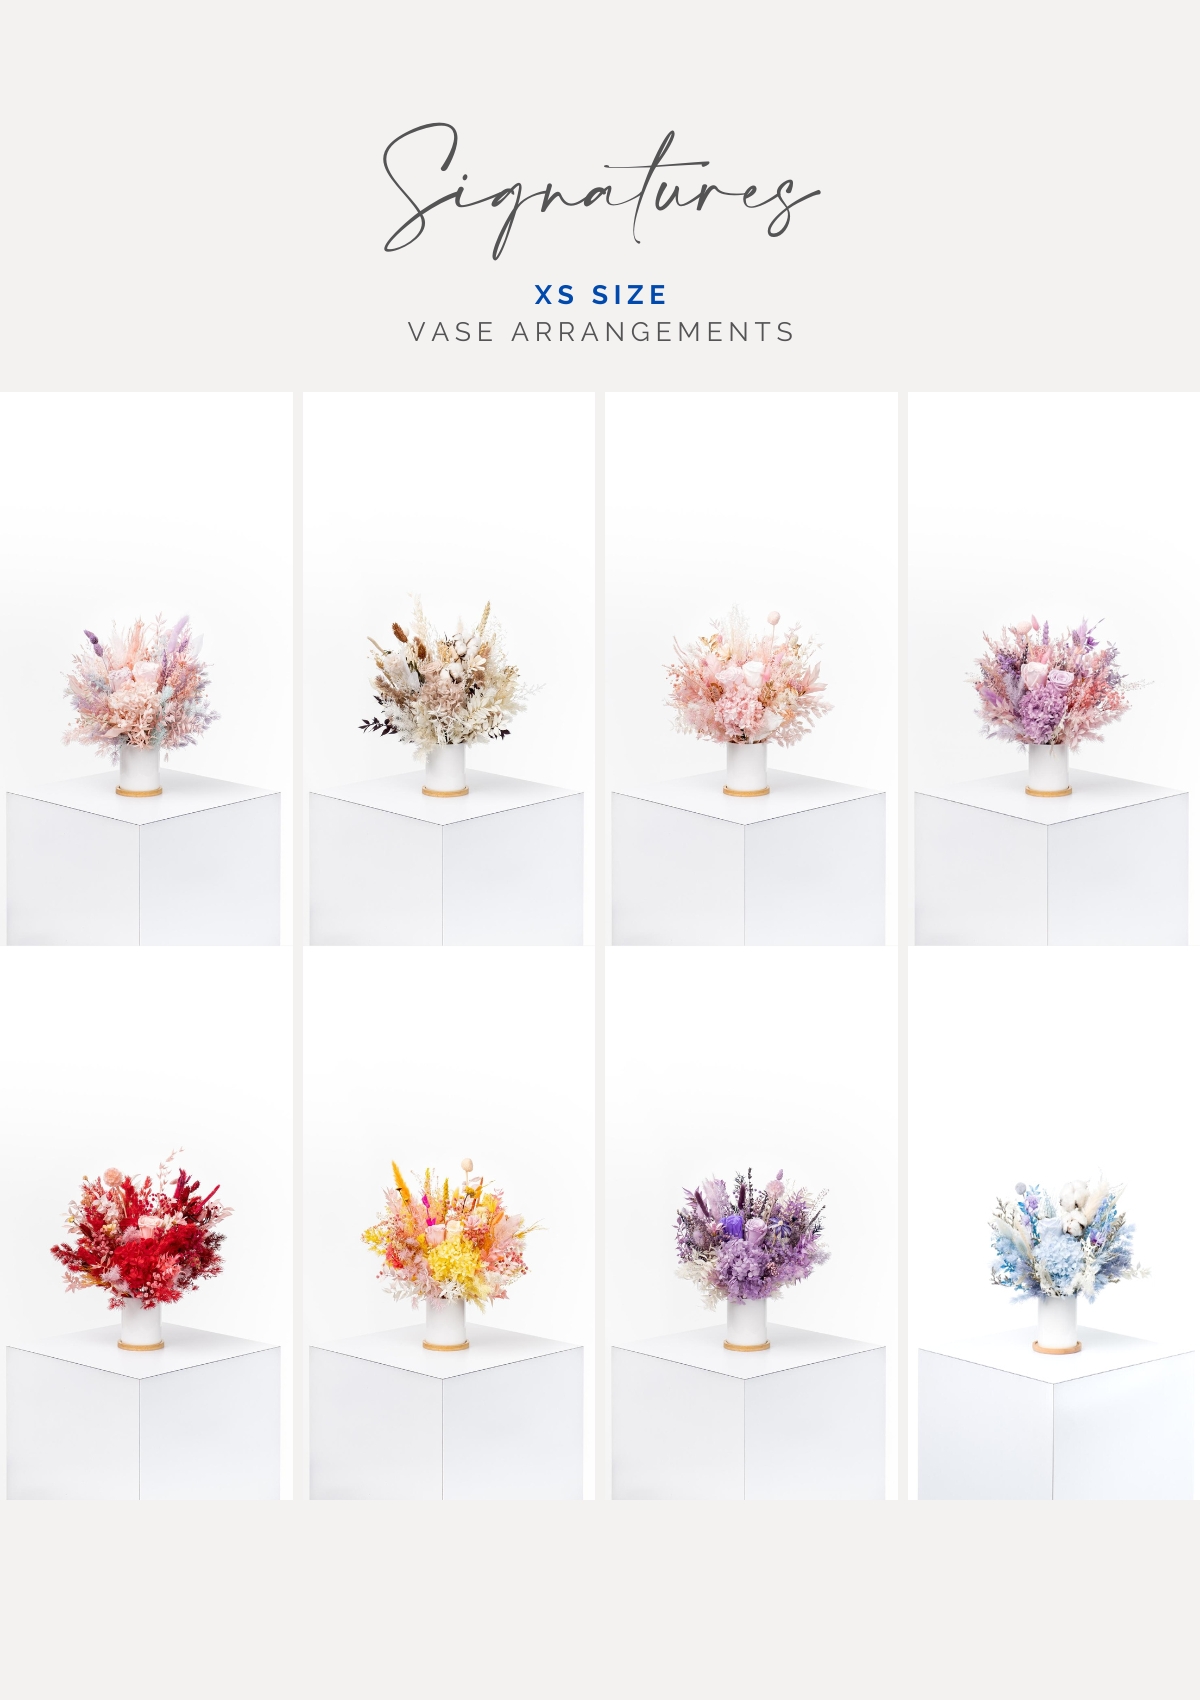 XS size - Vase